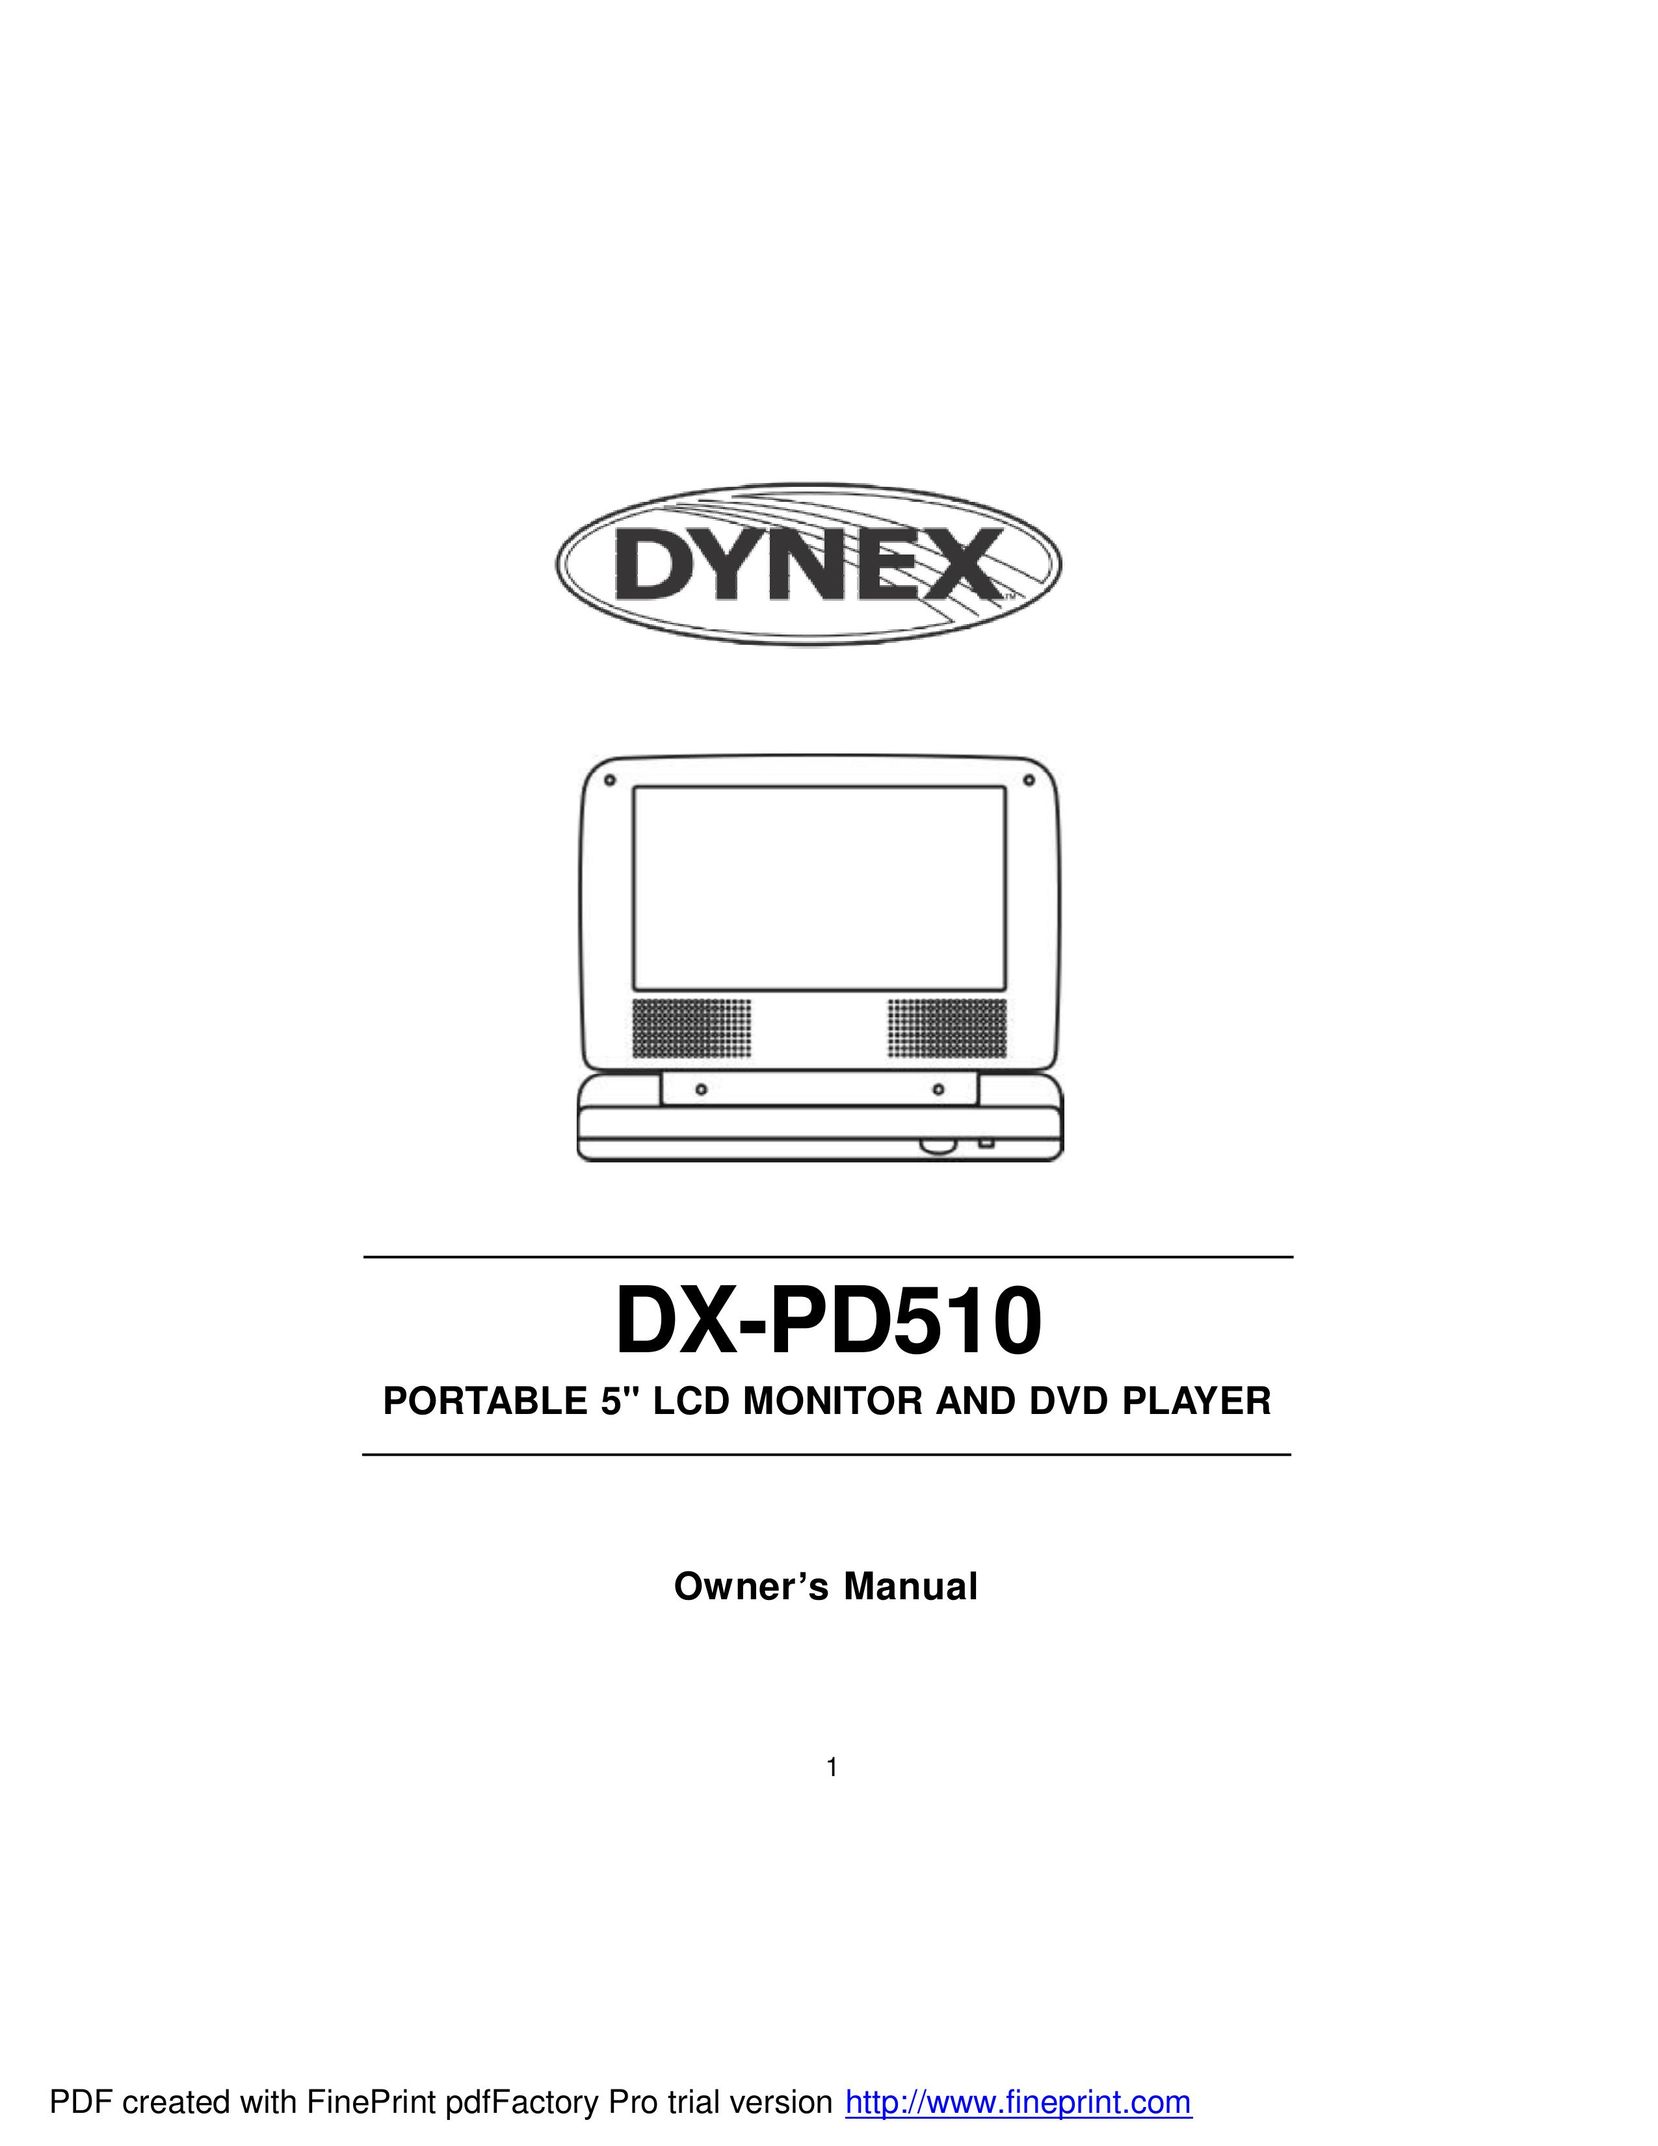 Dynex DX-PD510 TV DVD Combo User Manual